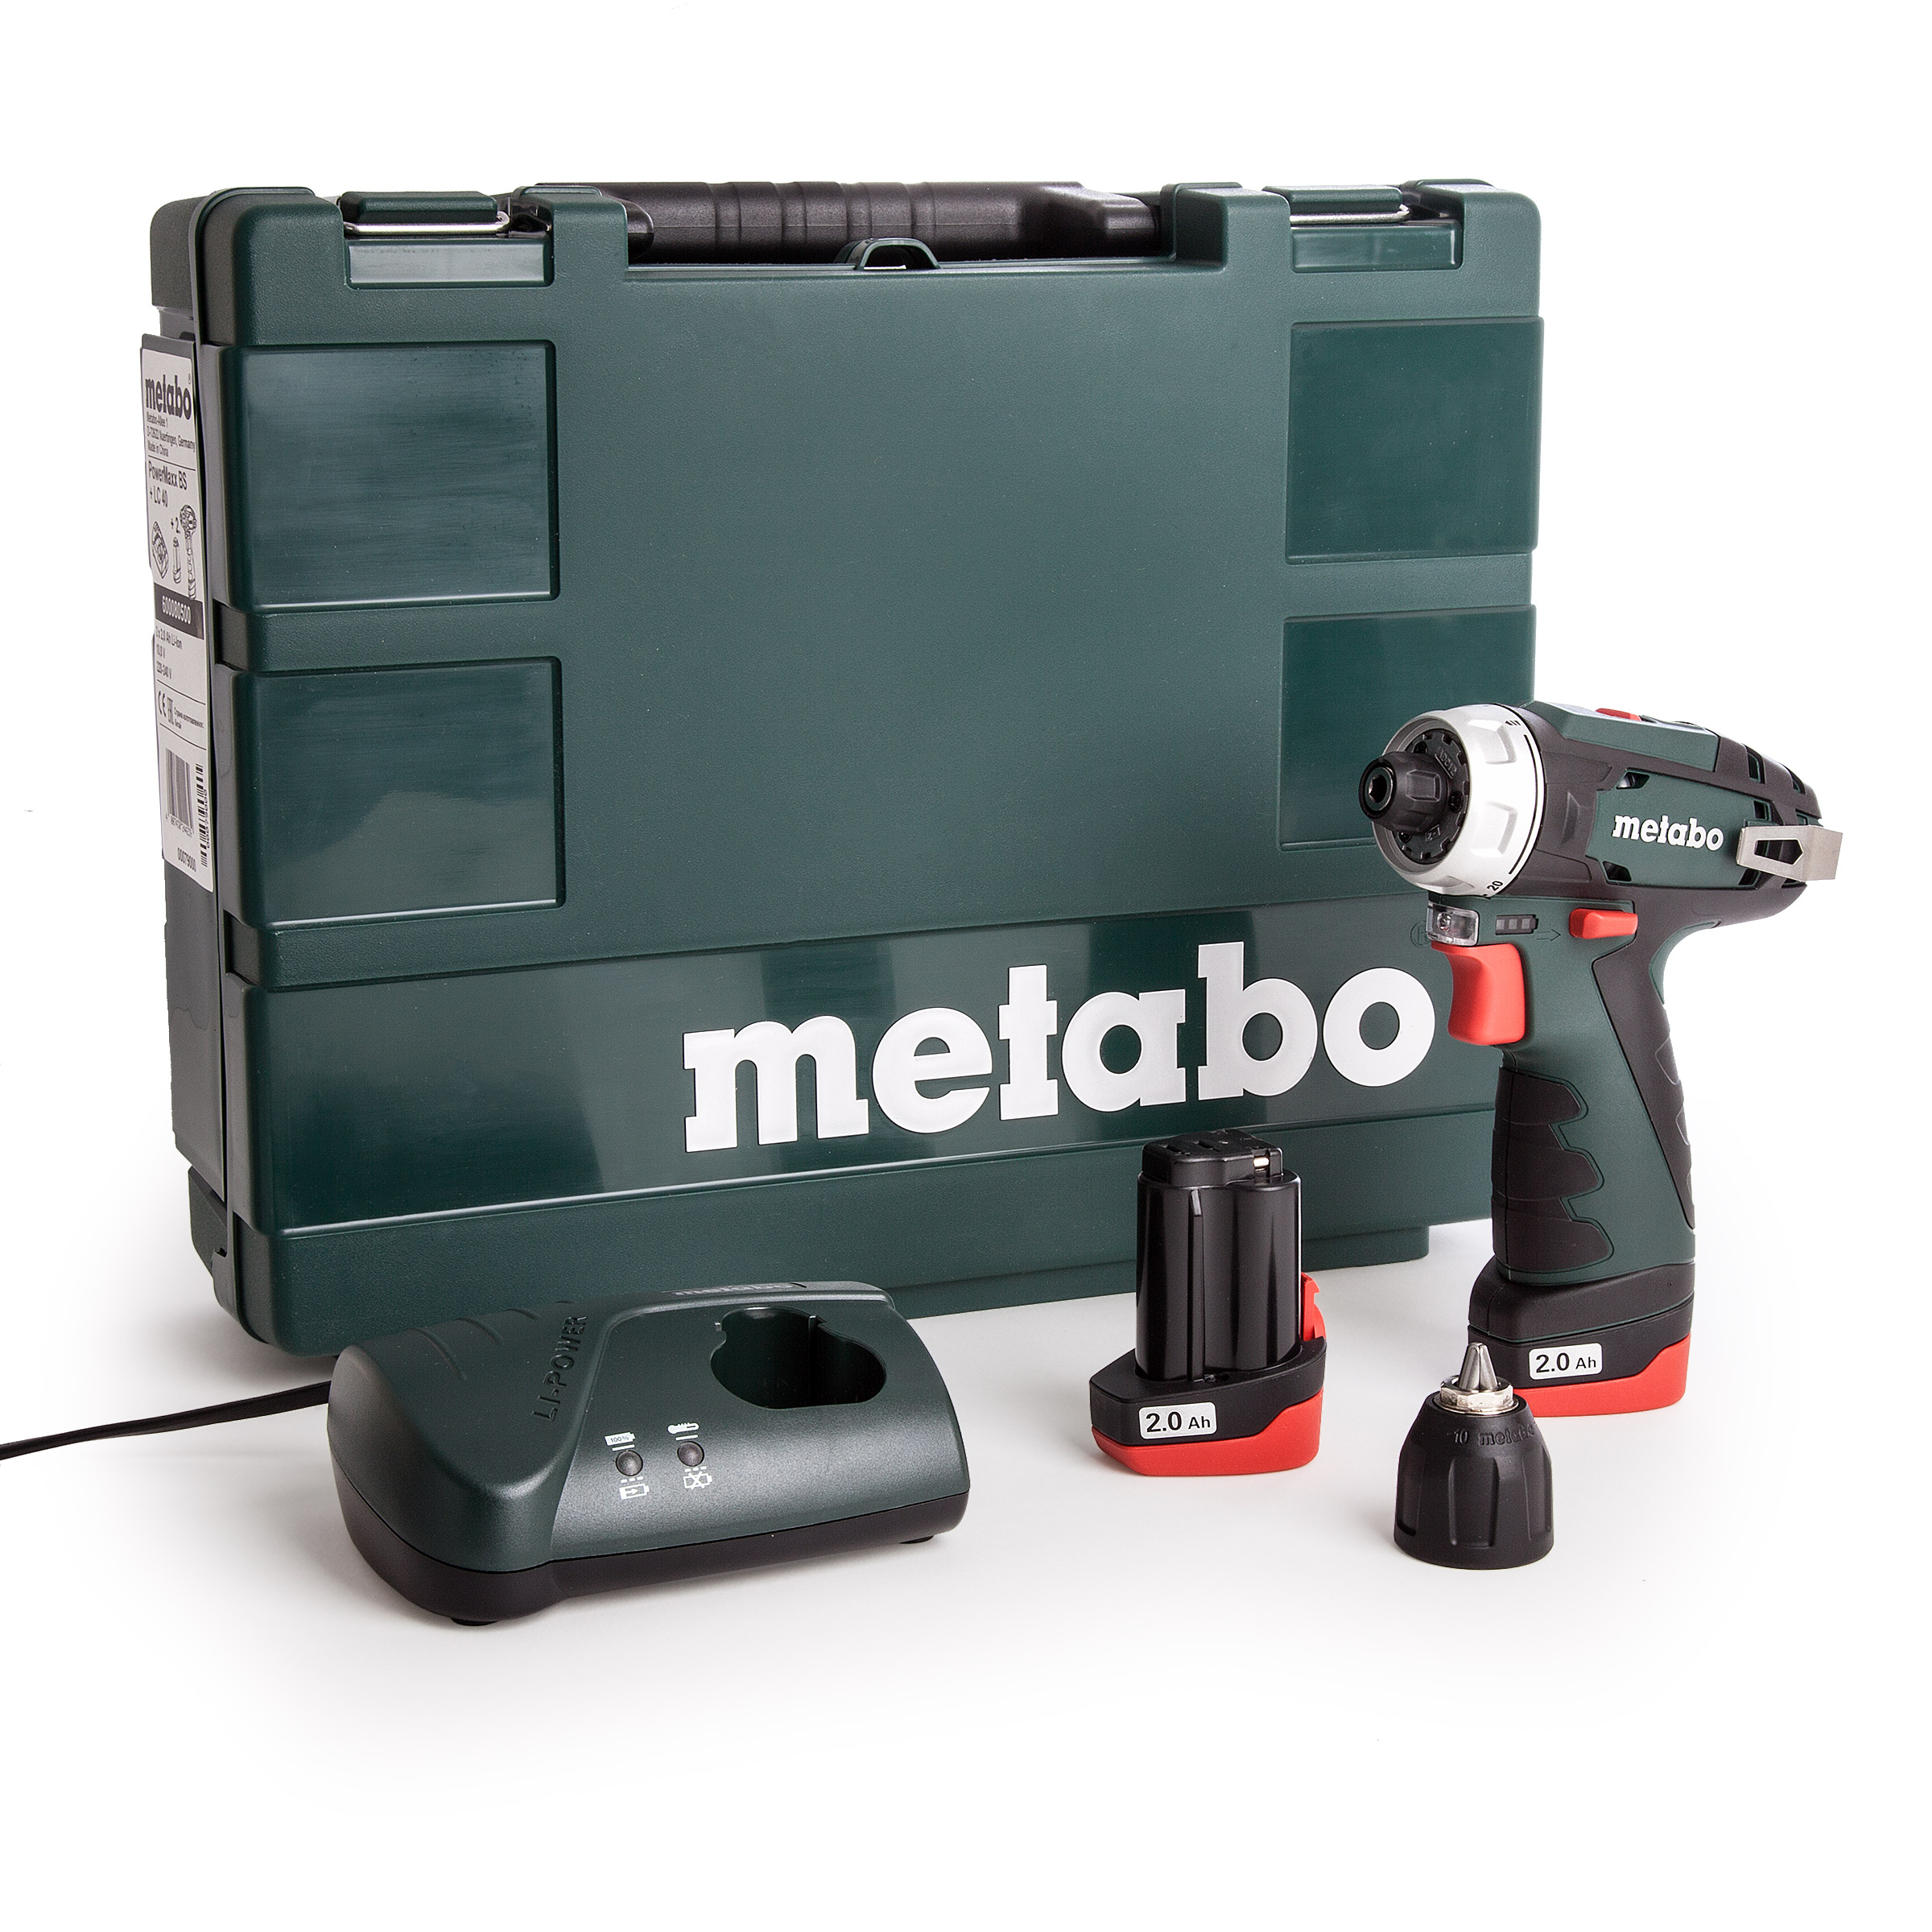 Metabo powermaxx basic 12v. Дрель-шуруповерт Metabo POWERMAXX. Метабо шуруповерт 10.8 POWERMAXX BS. Metabo 600080500. Шуруповерт Metabo 600080500.